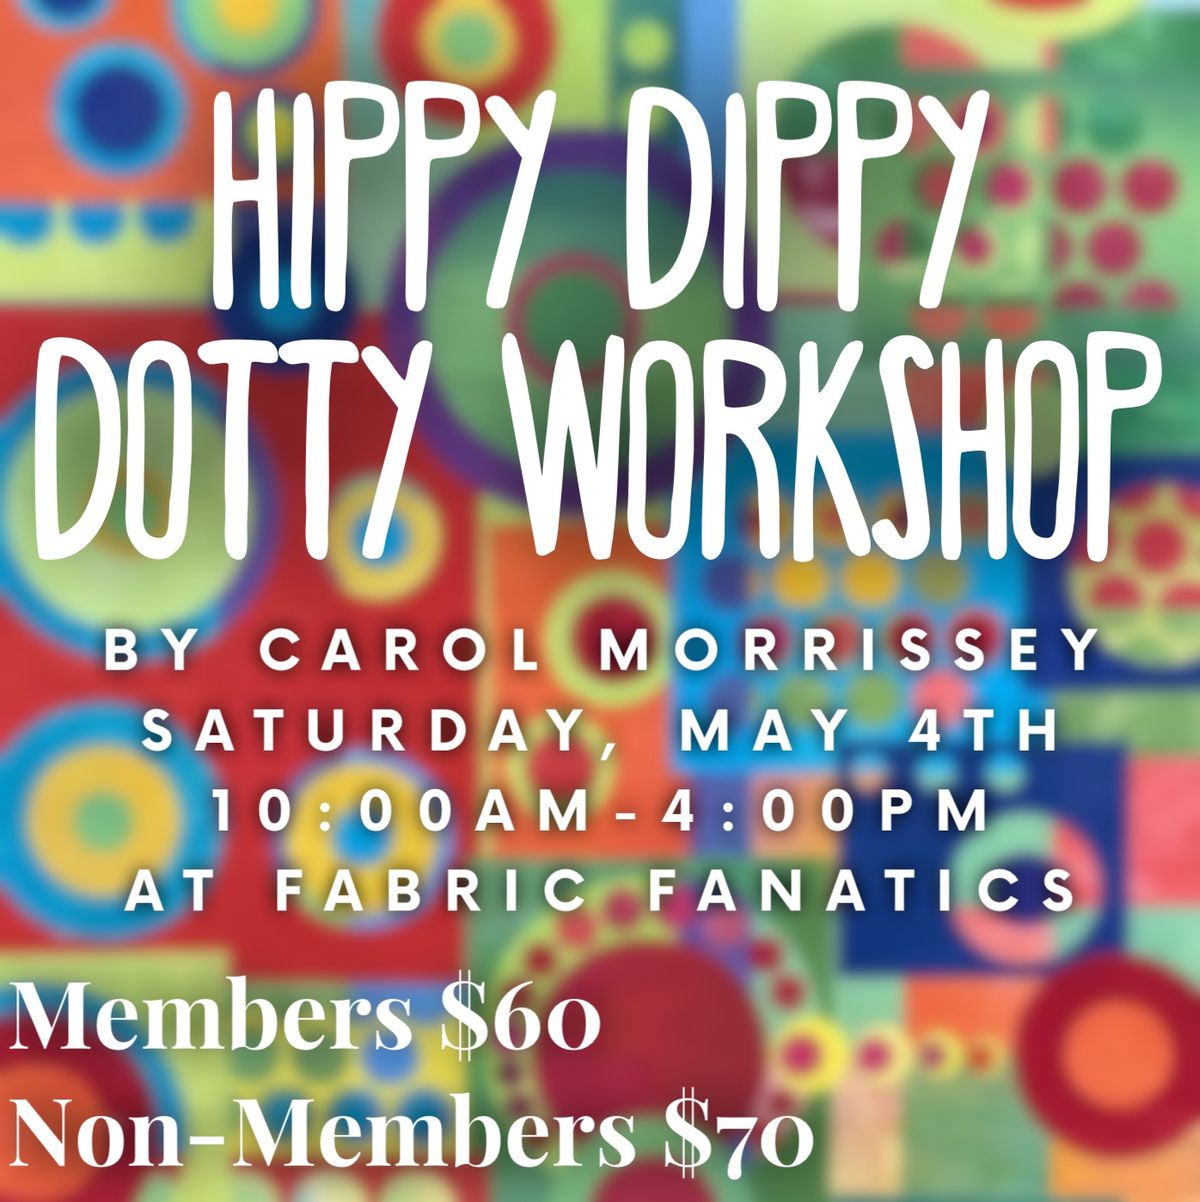 Hippy Dippy Dotty Workshop